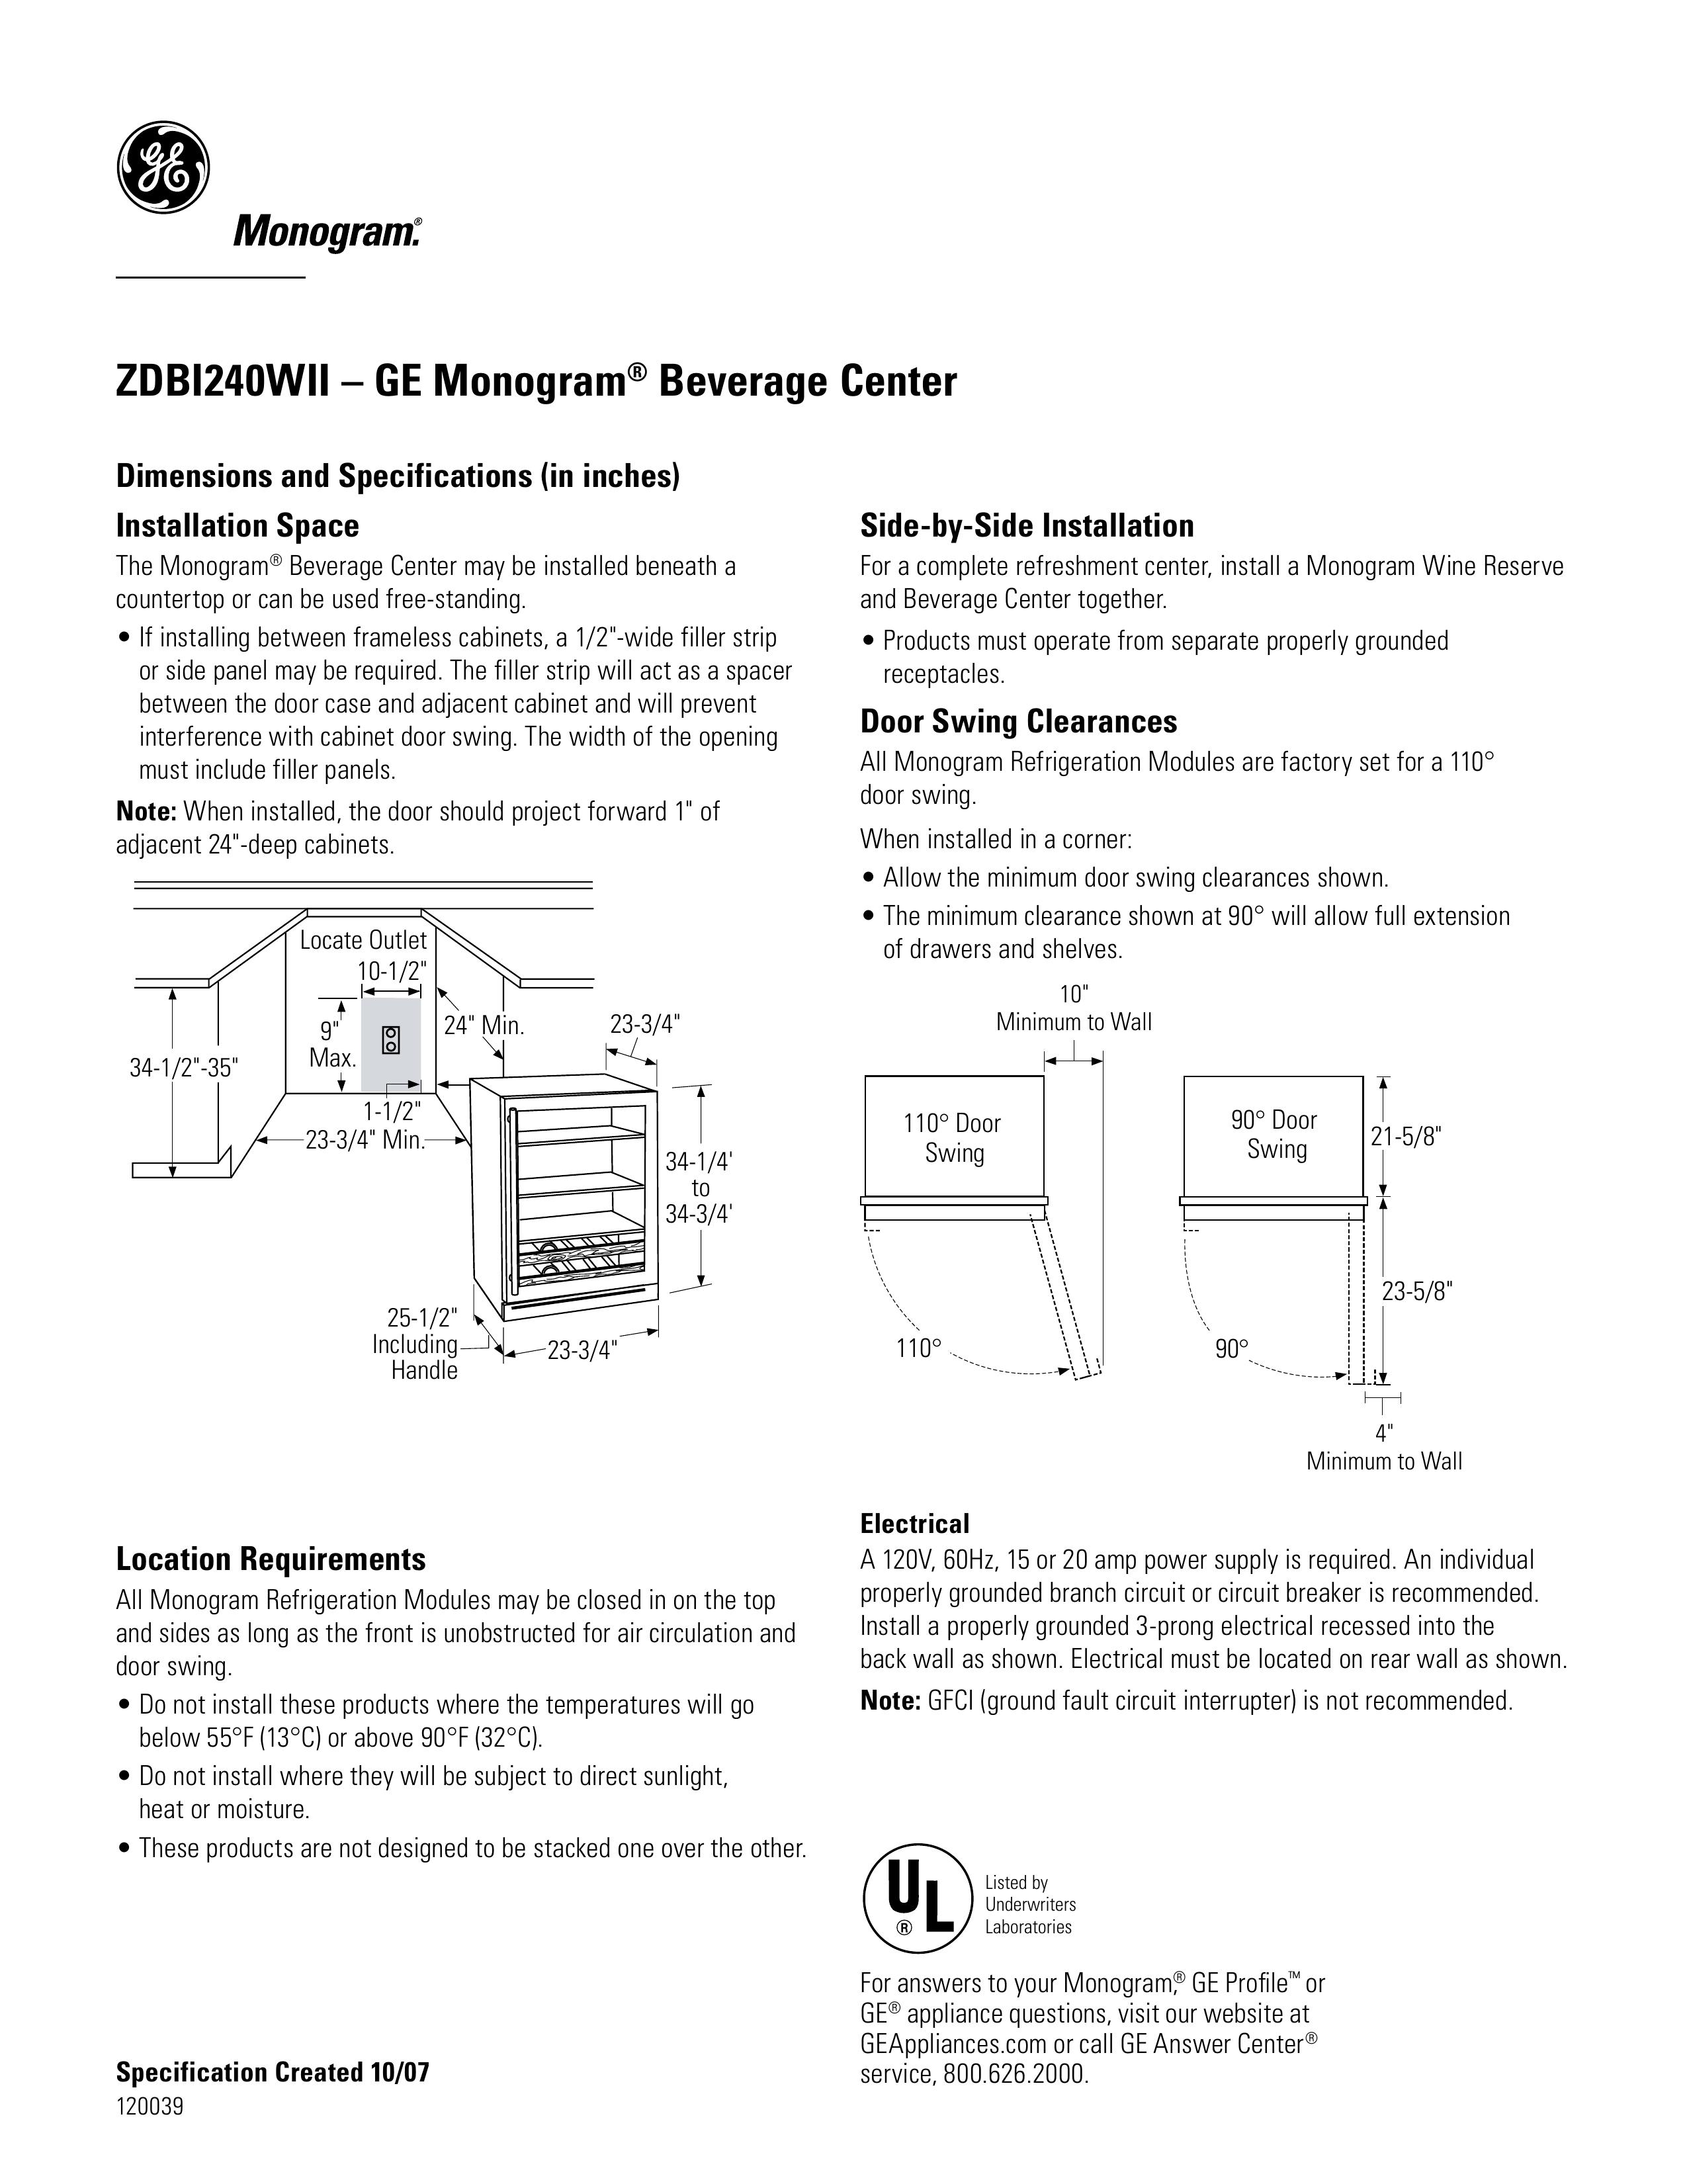 GE Monogram ZDBI240WII Refrigerator User Manual